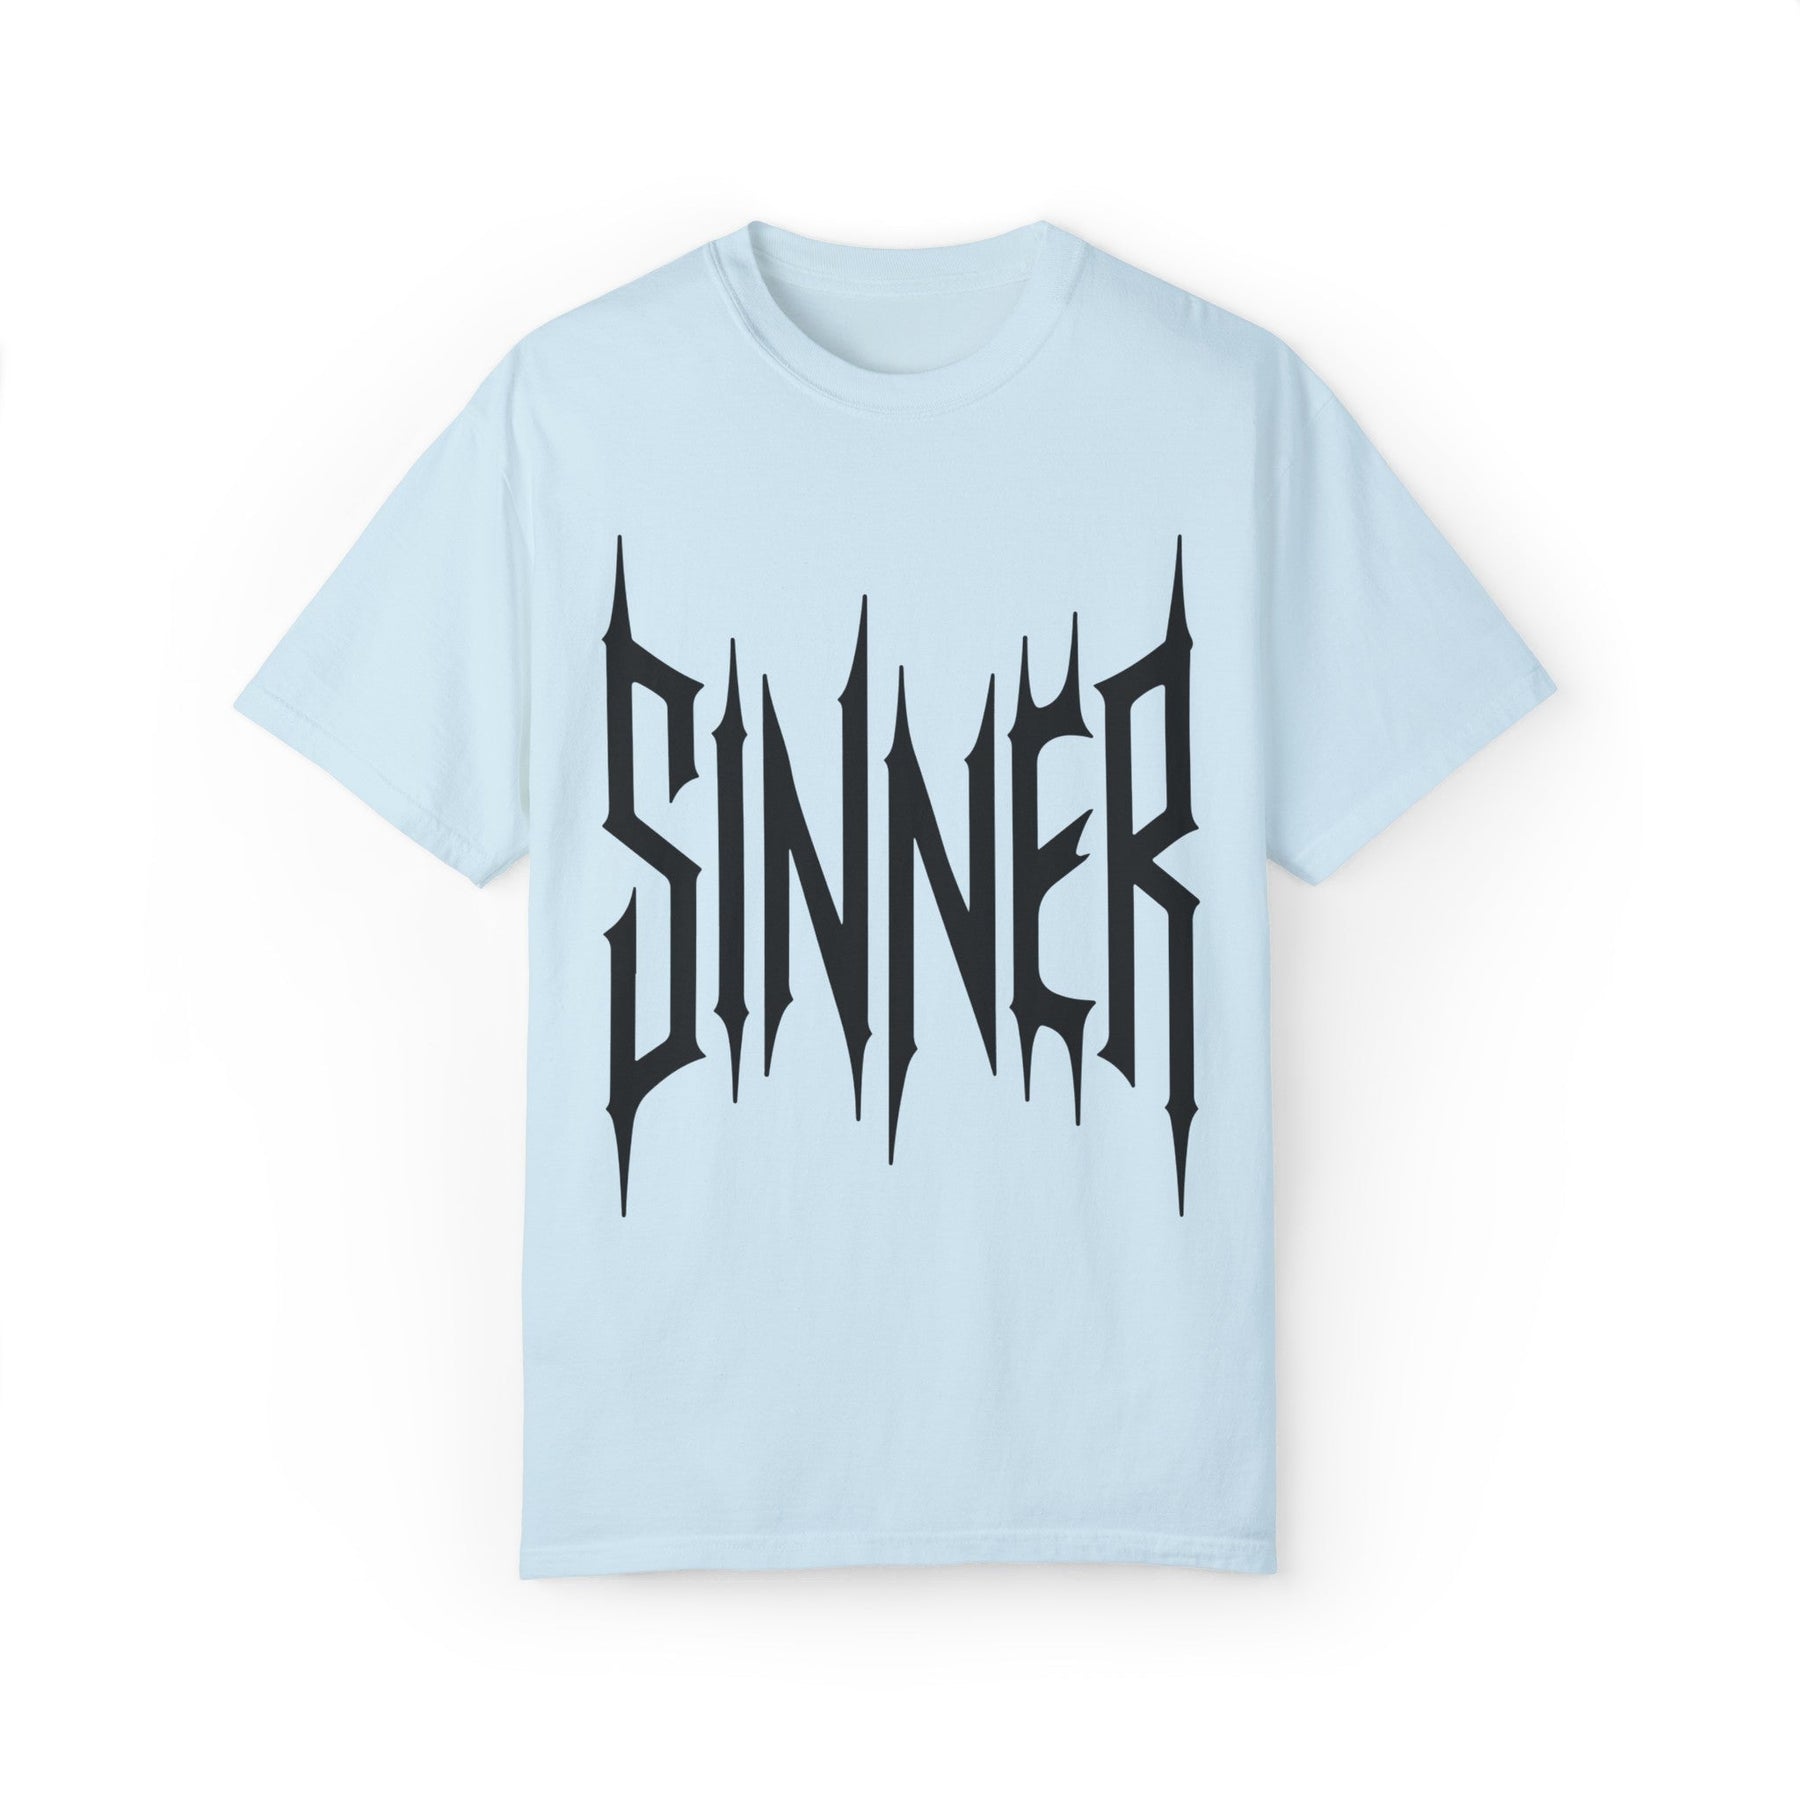 Sinner Oversized Beefy Tee - Goth Cloth Co.T - Shirt64461620005462860662